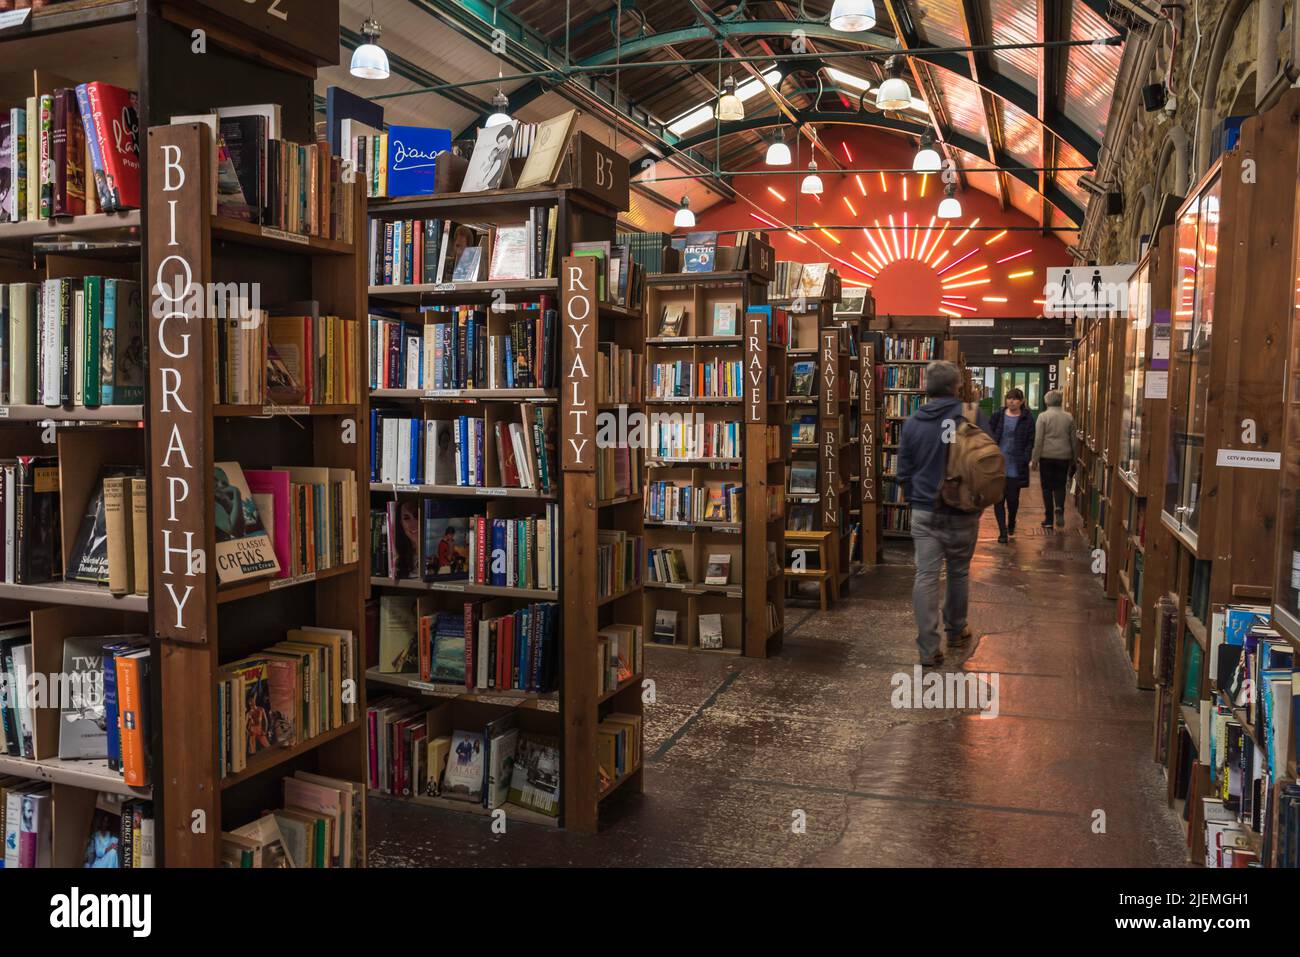 Barter Books Northumberland, view inside the famous Barter Books book shop in Alnwick, Northumberland, England, UK Stock Photo